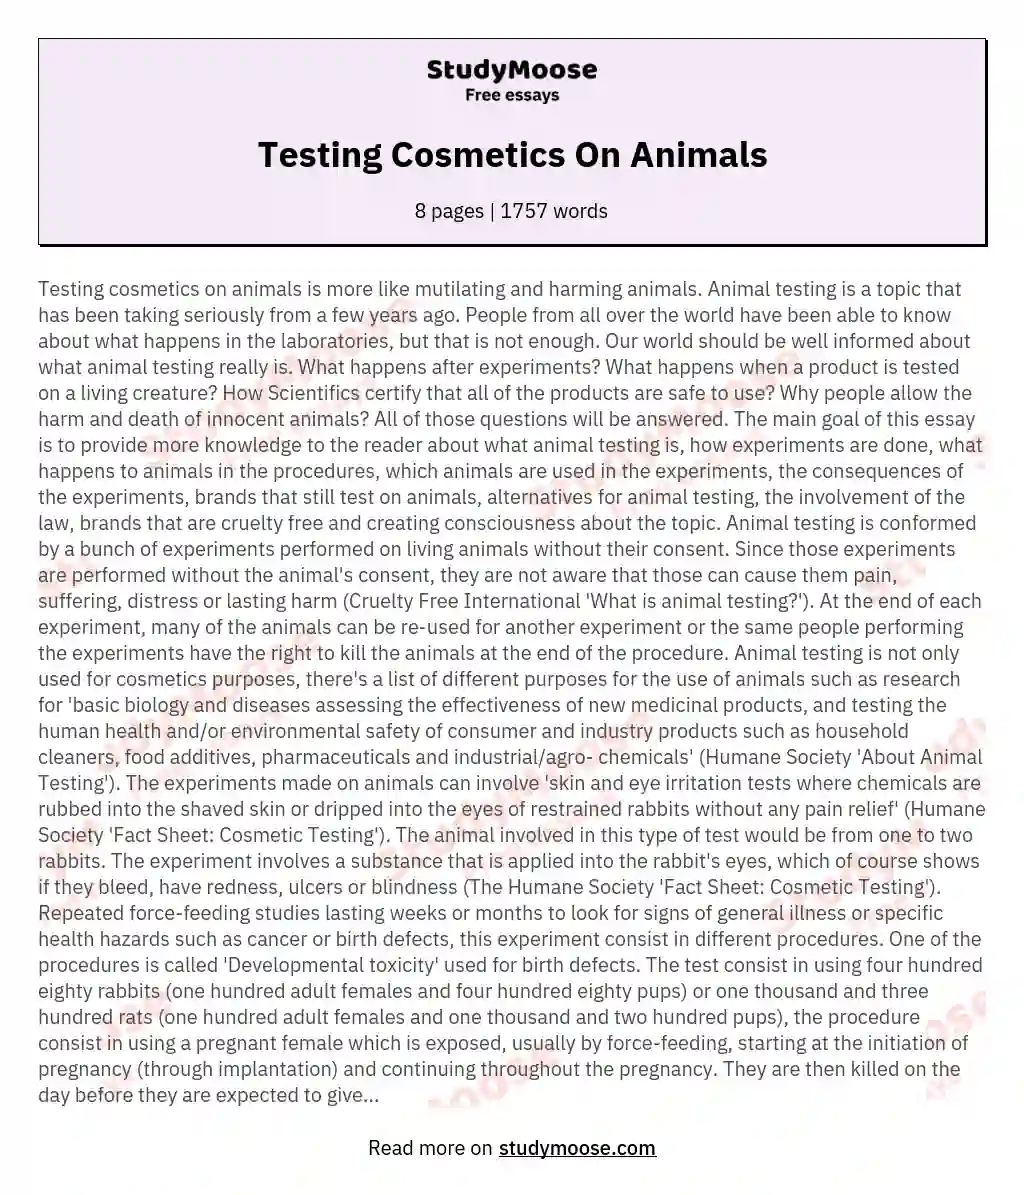 Testing Cosmetics On Animals essay